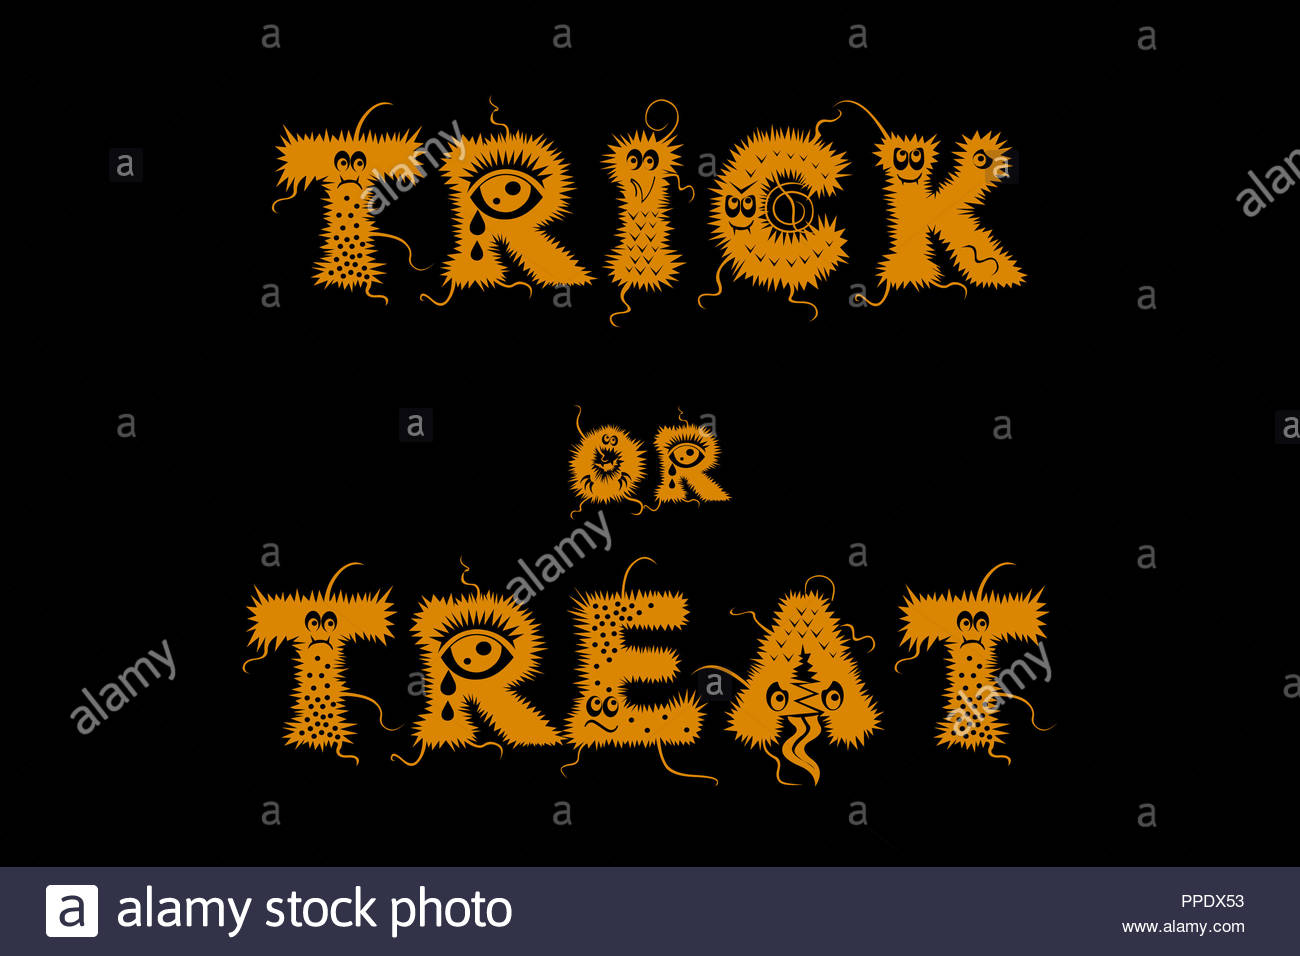 Happy Halloween Trick Or Treat Wallpaper Stock Photo